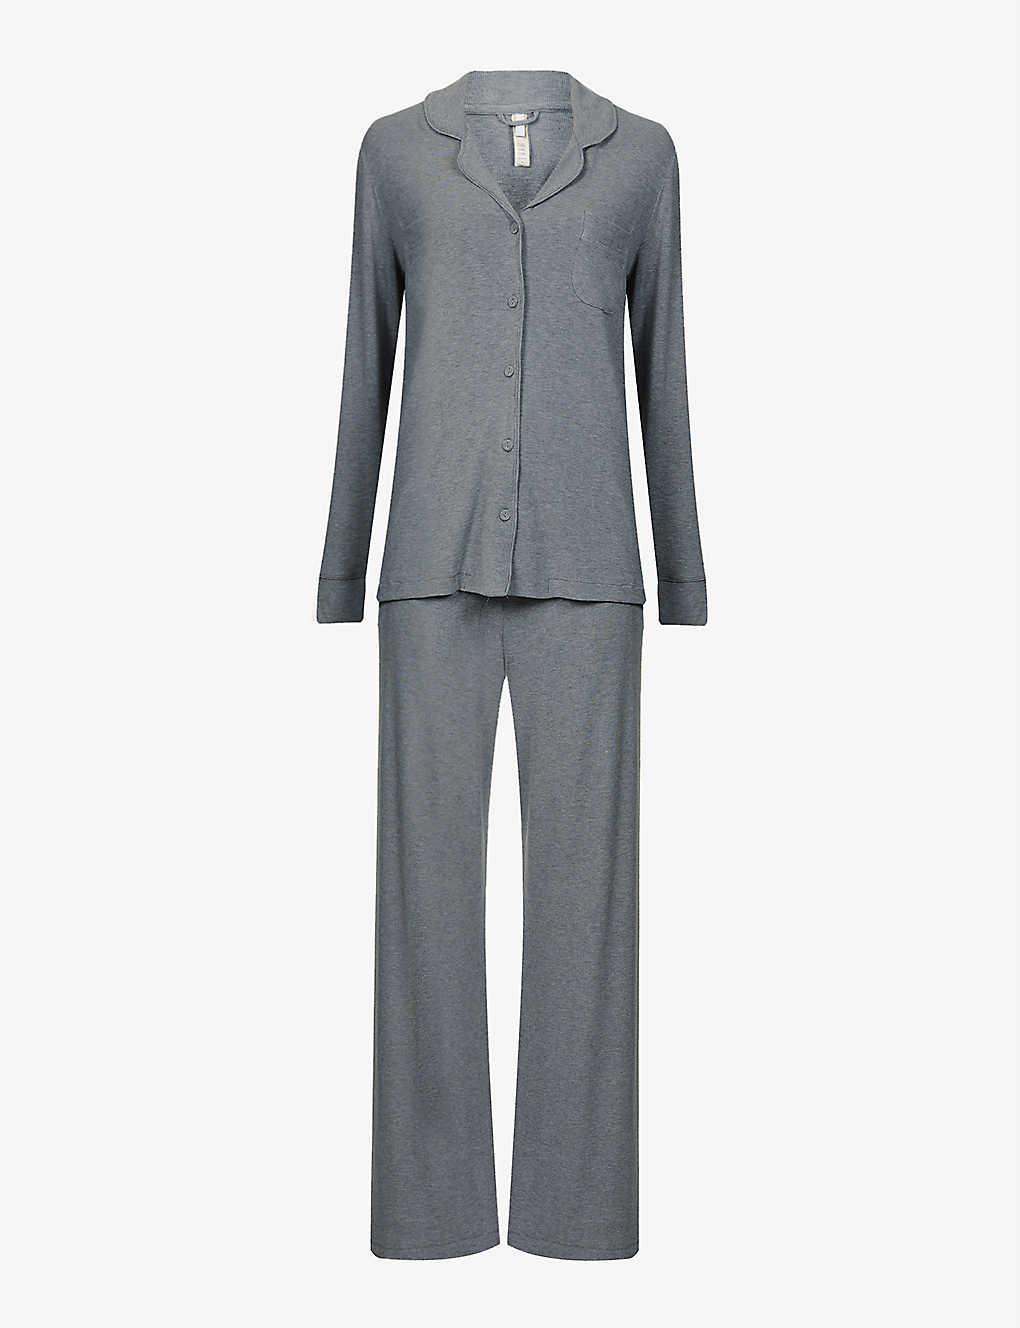 Shop Skims Women's Heather Grey Soft Lounge Stretch-jersey Pyjama Set